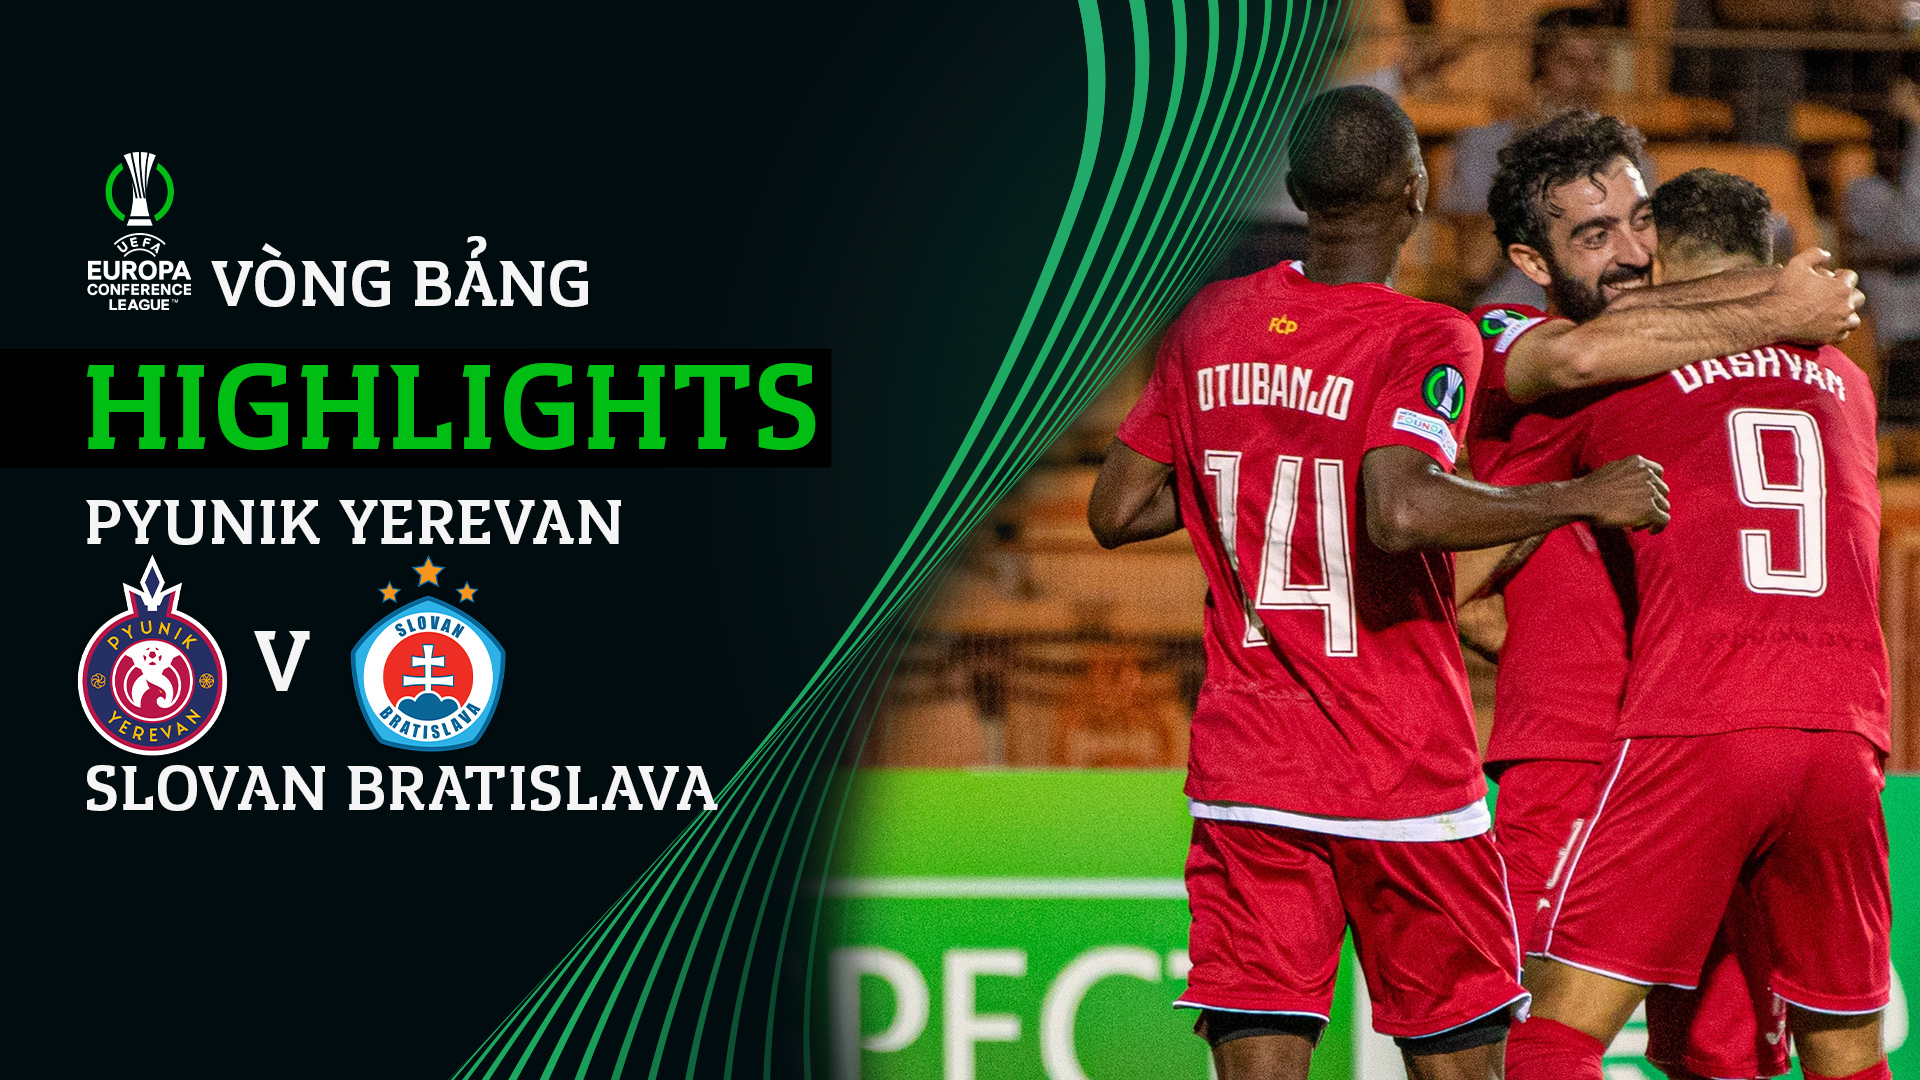 Pyunik Yerevan - Slovan Bratislava Highlights - Conference League